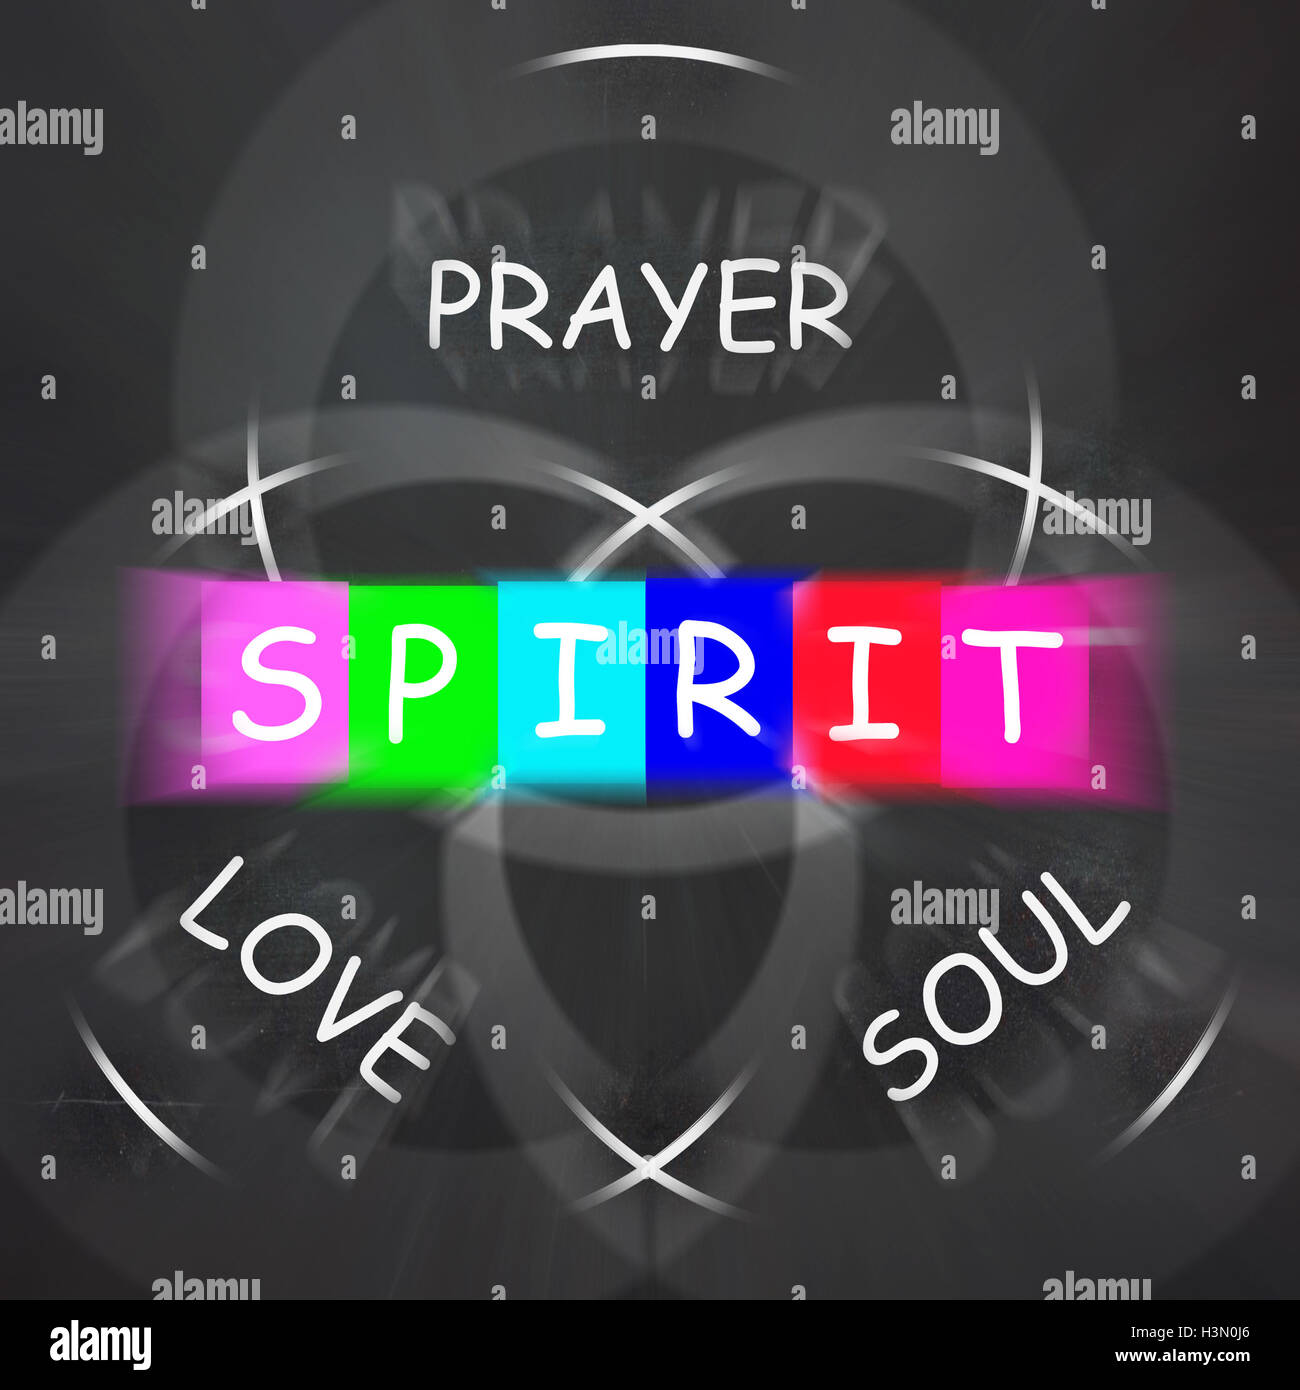 Spiritual Words Displays Prayer Love Soul and Spirit Stock Photo